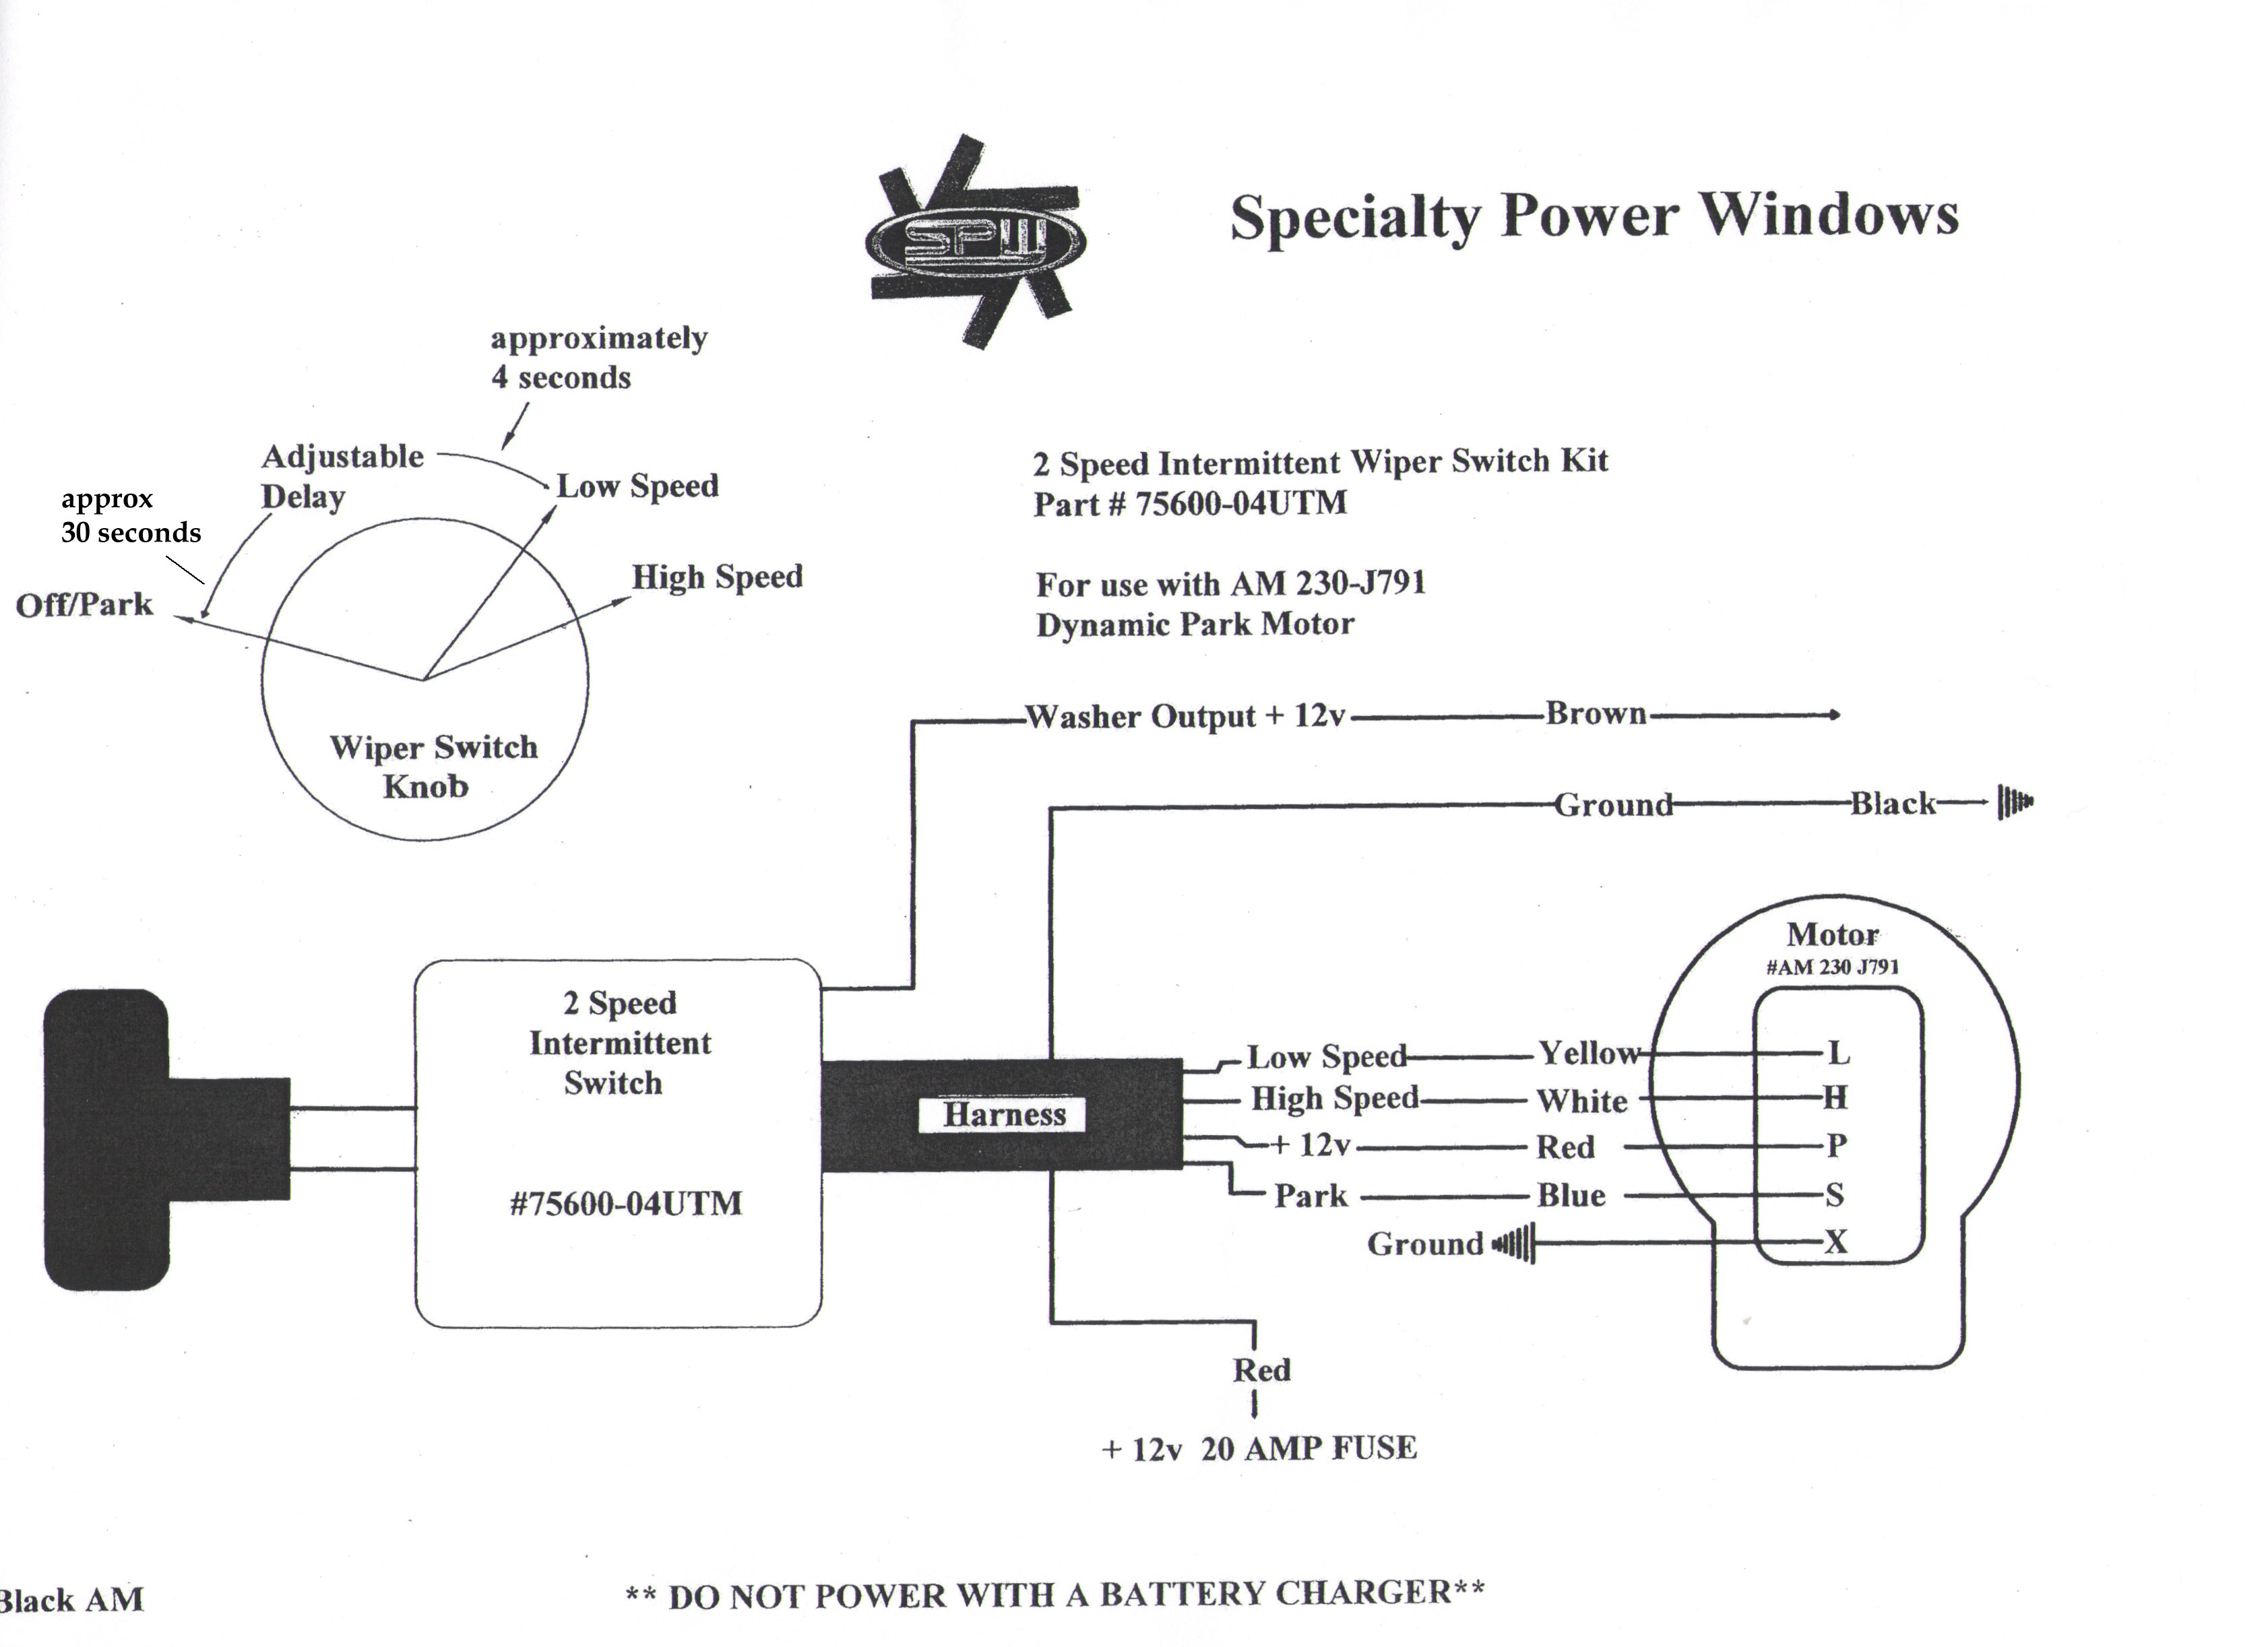 wiring diagram on cj7 jeep - Wiring Diagram